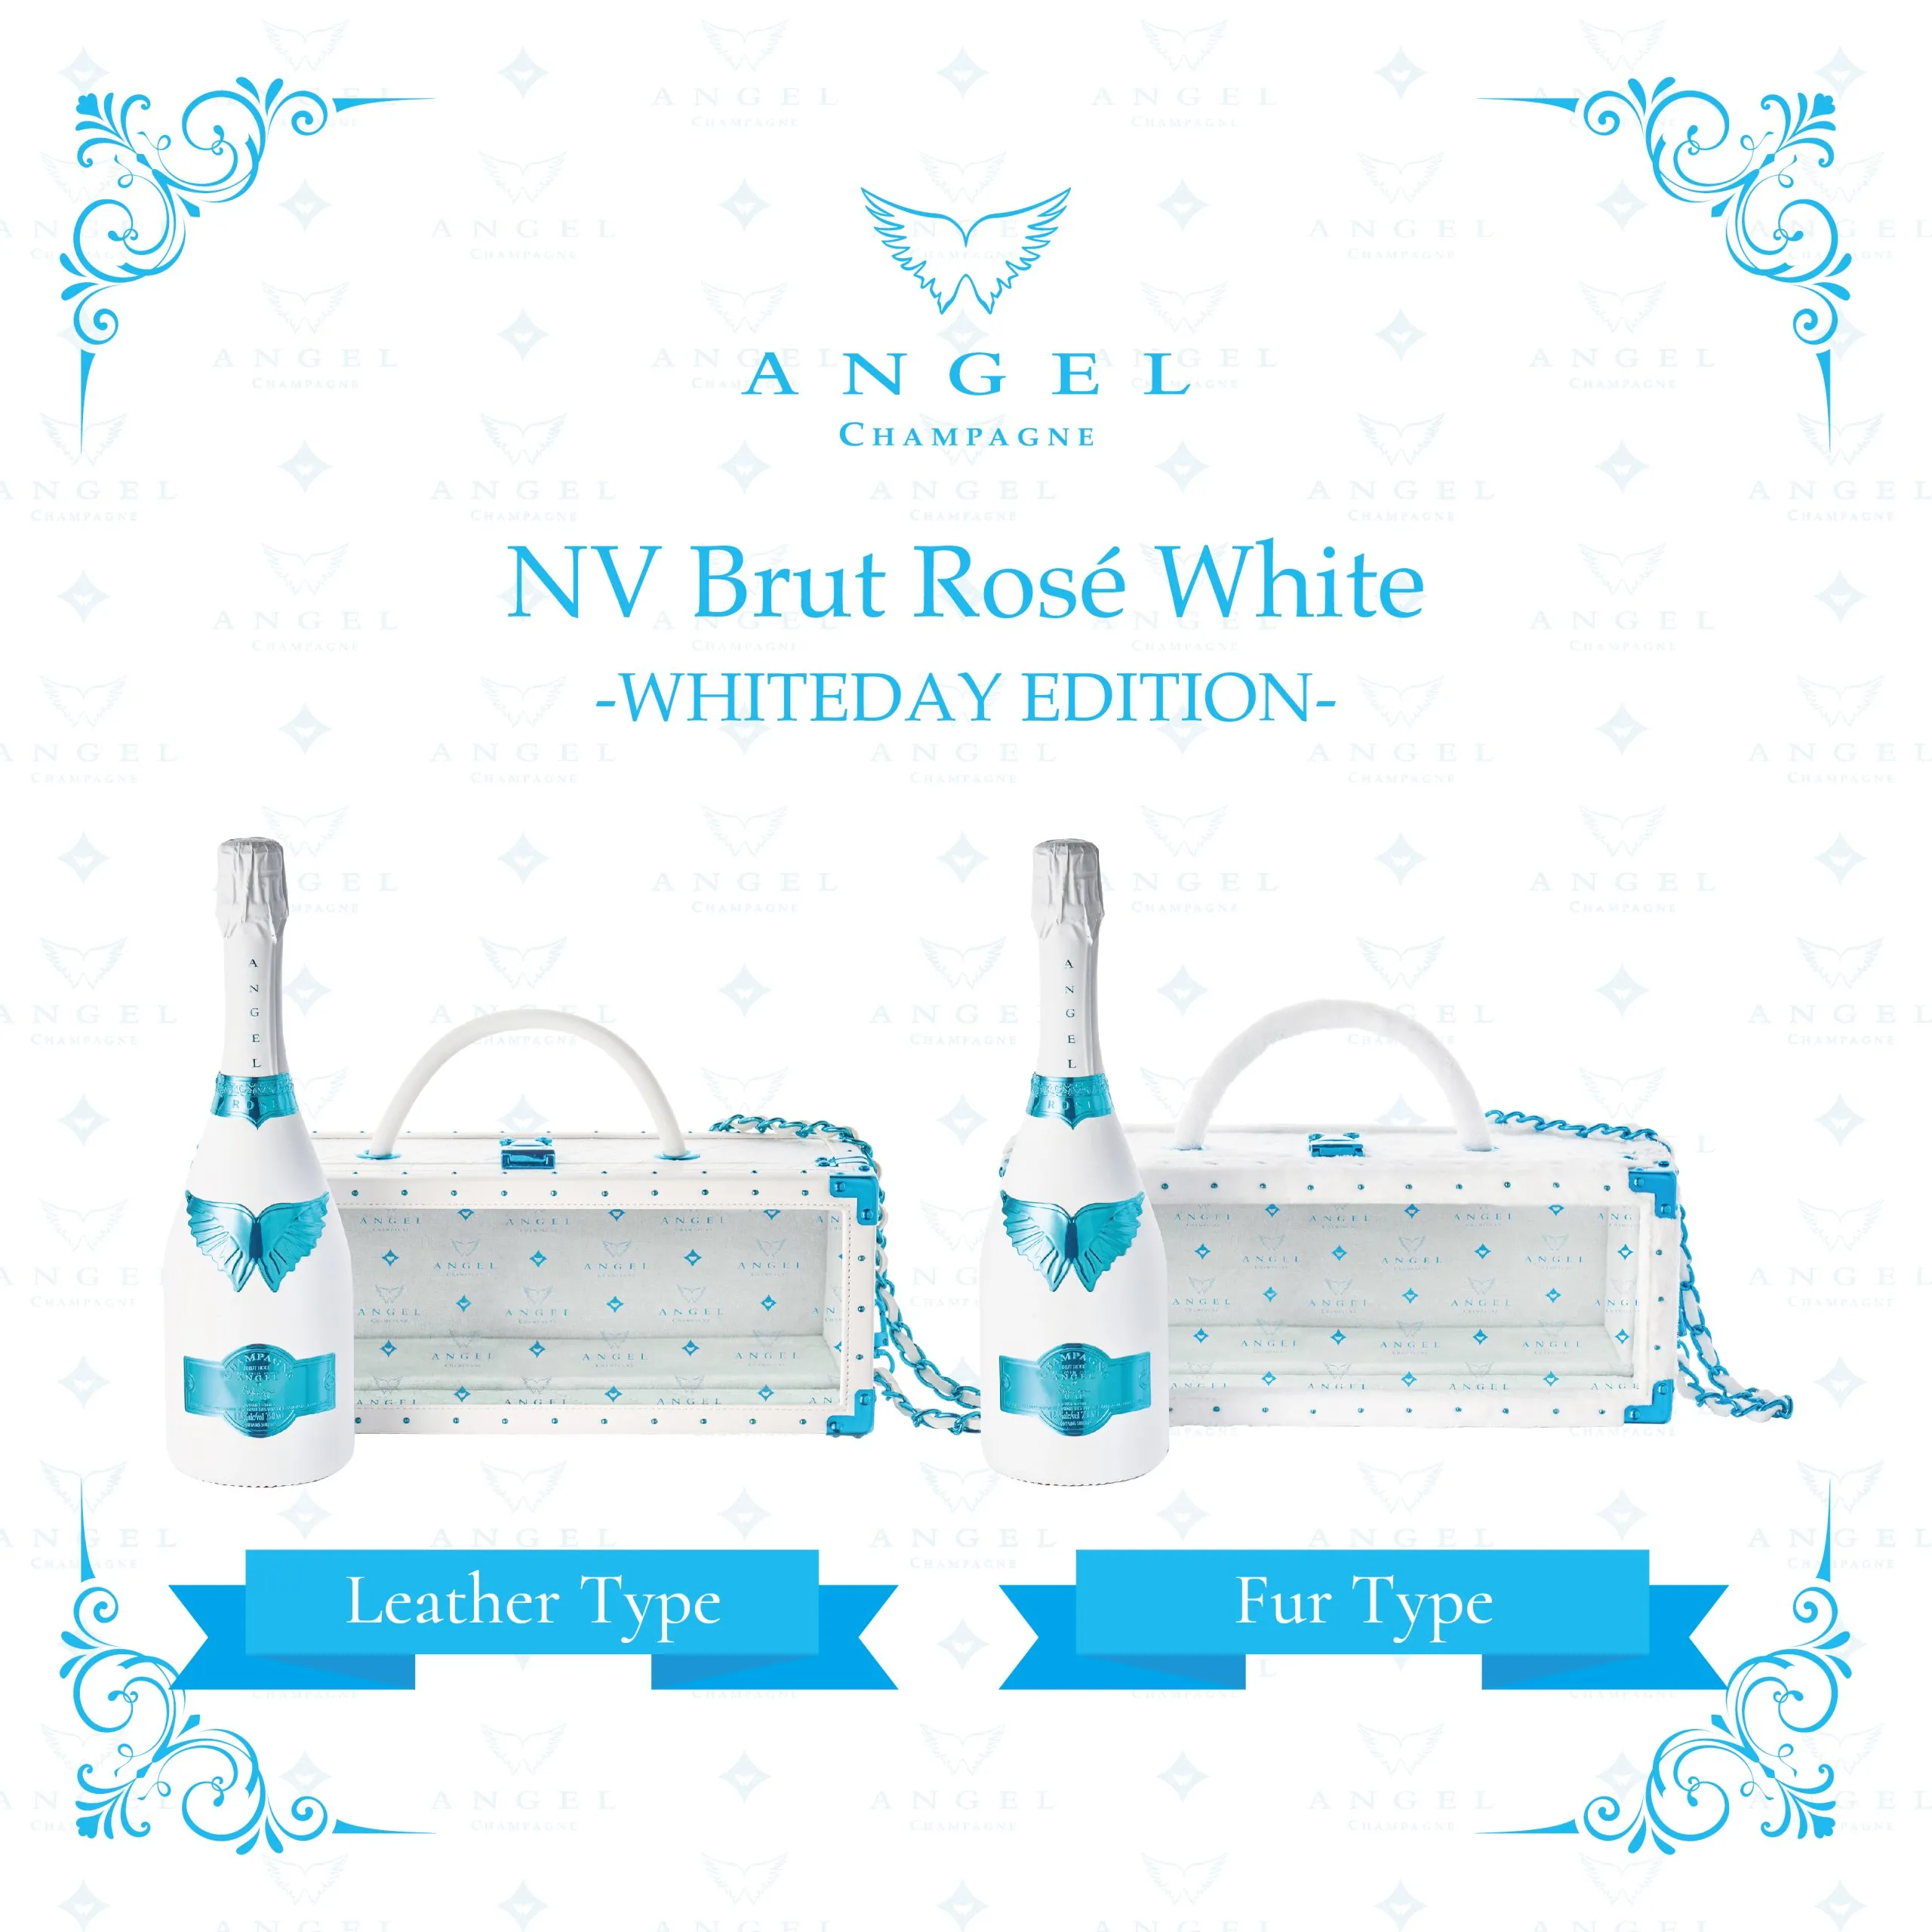 ANGEL CHAMPAGNE NV Brut Rosé White-WHITE DAY EDITION-発売開始 